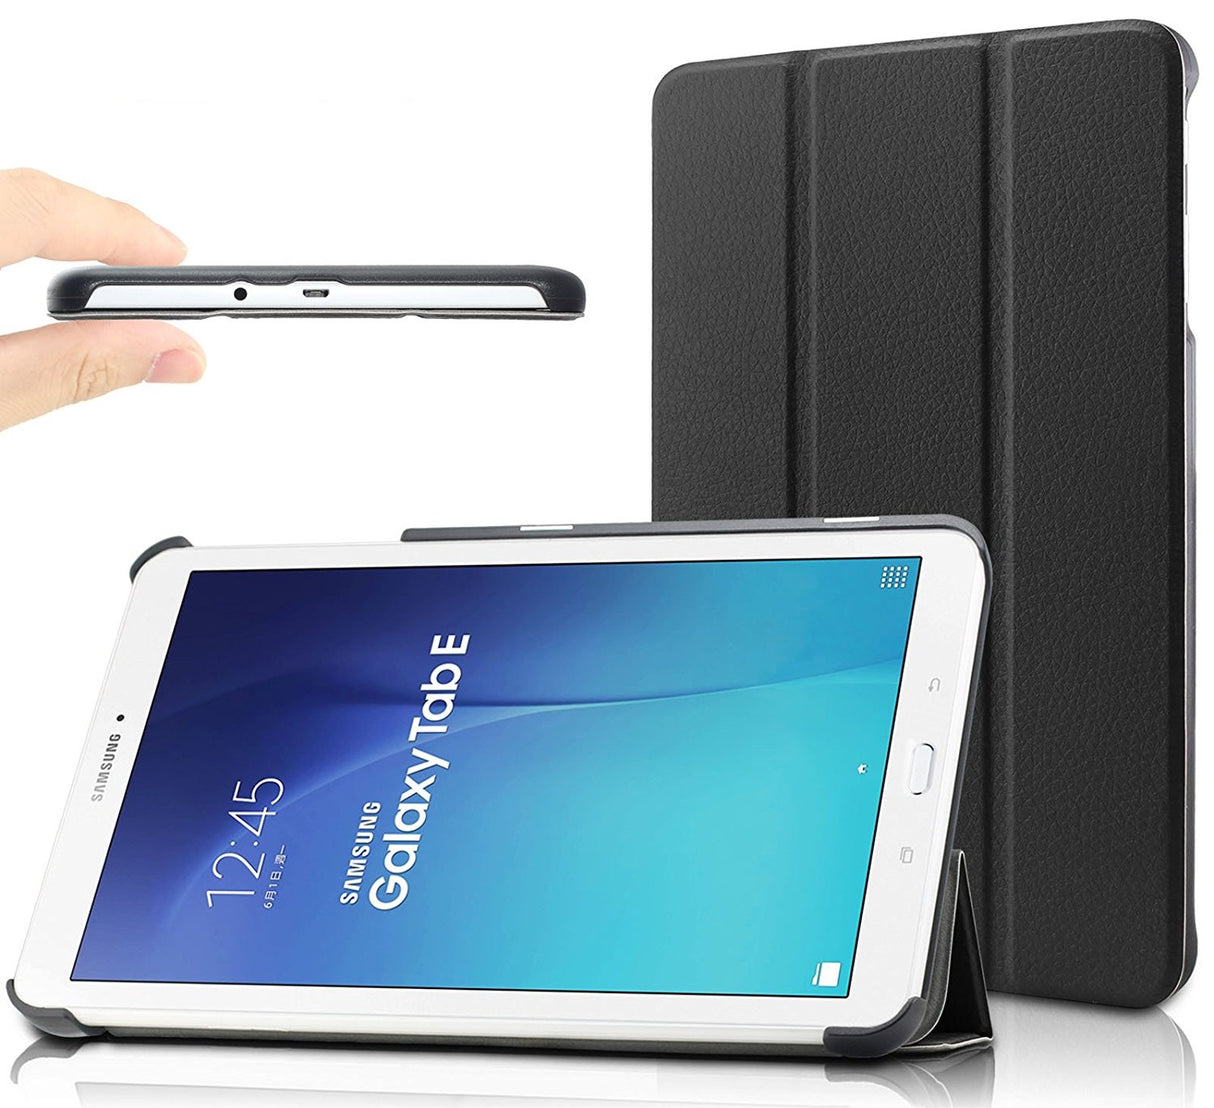 Capa 3 Dobras Smart Case Trifold Slim para Samsung Galaxy Tab E 9.6 T560 - Multi4you®